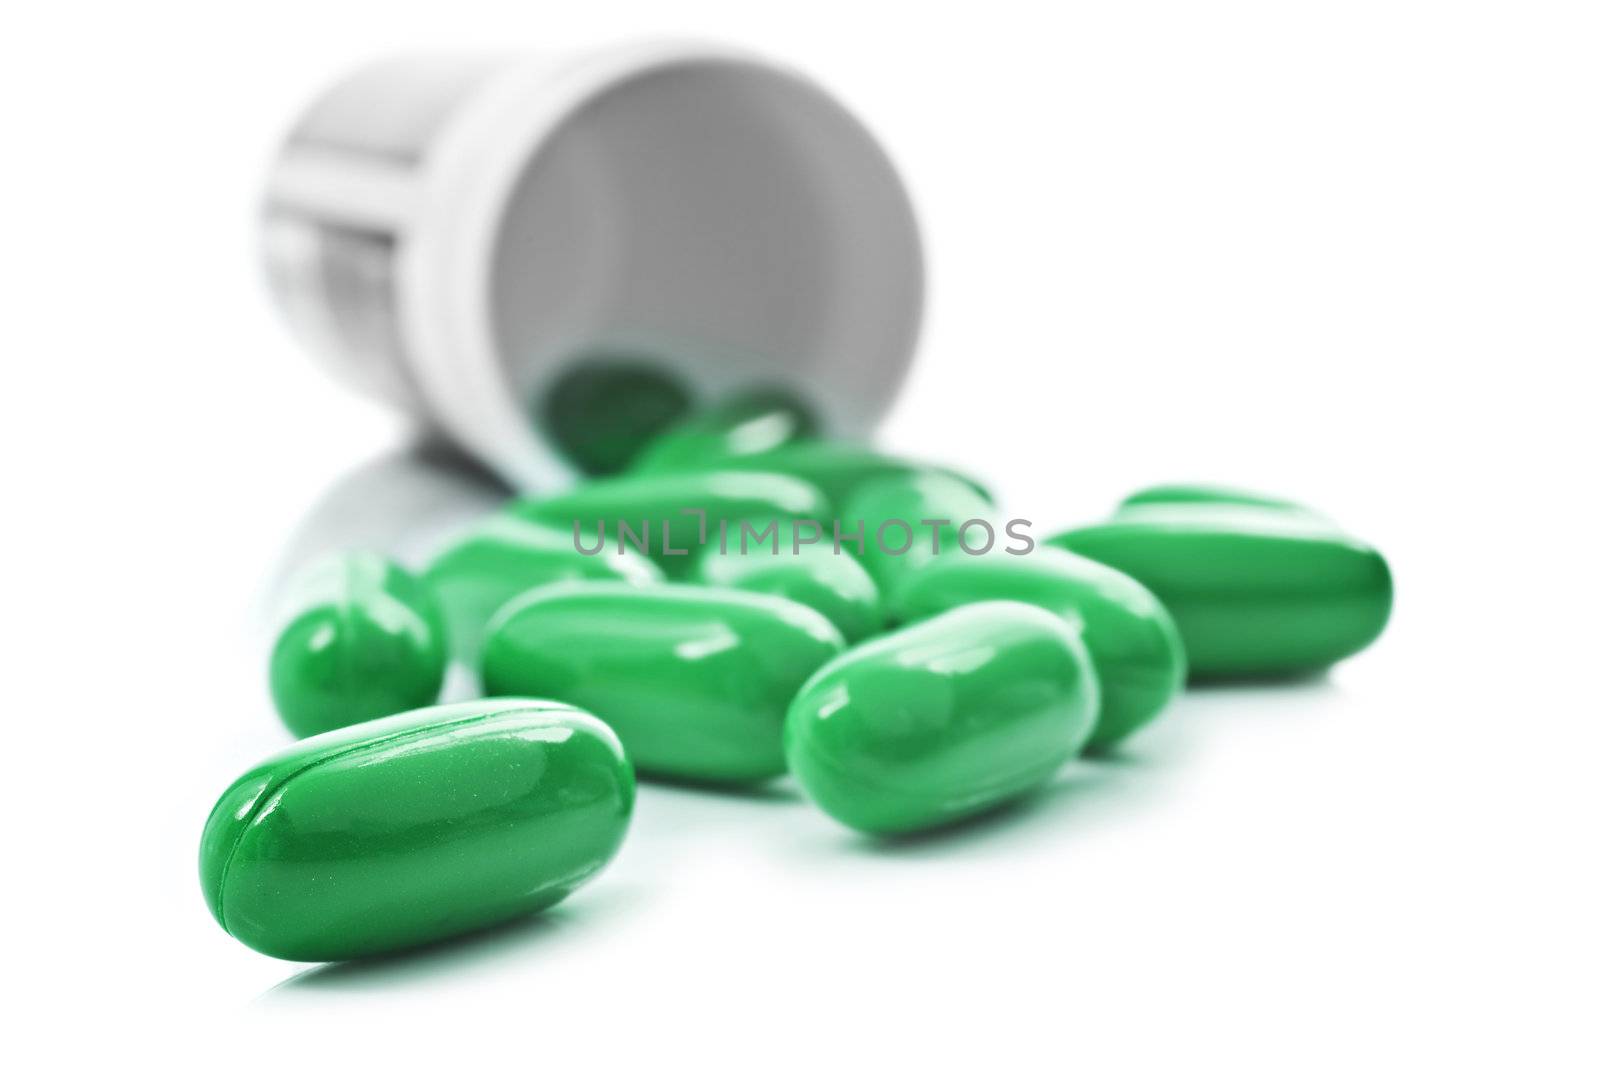 Green pills an pill bottle on white background